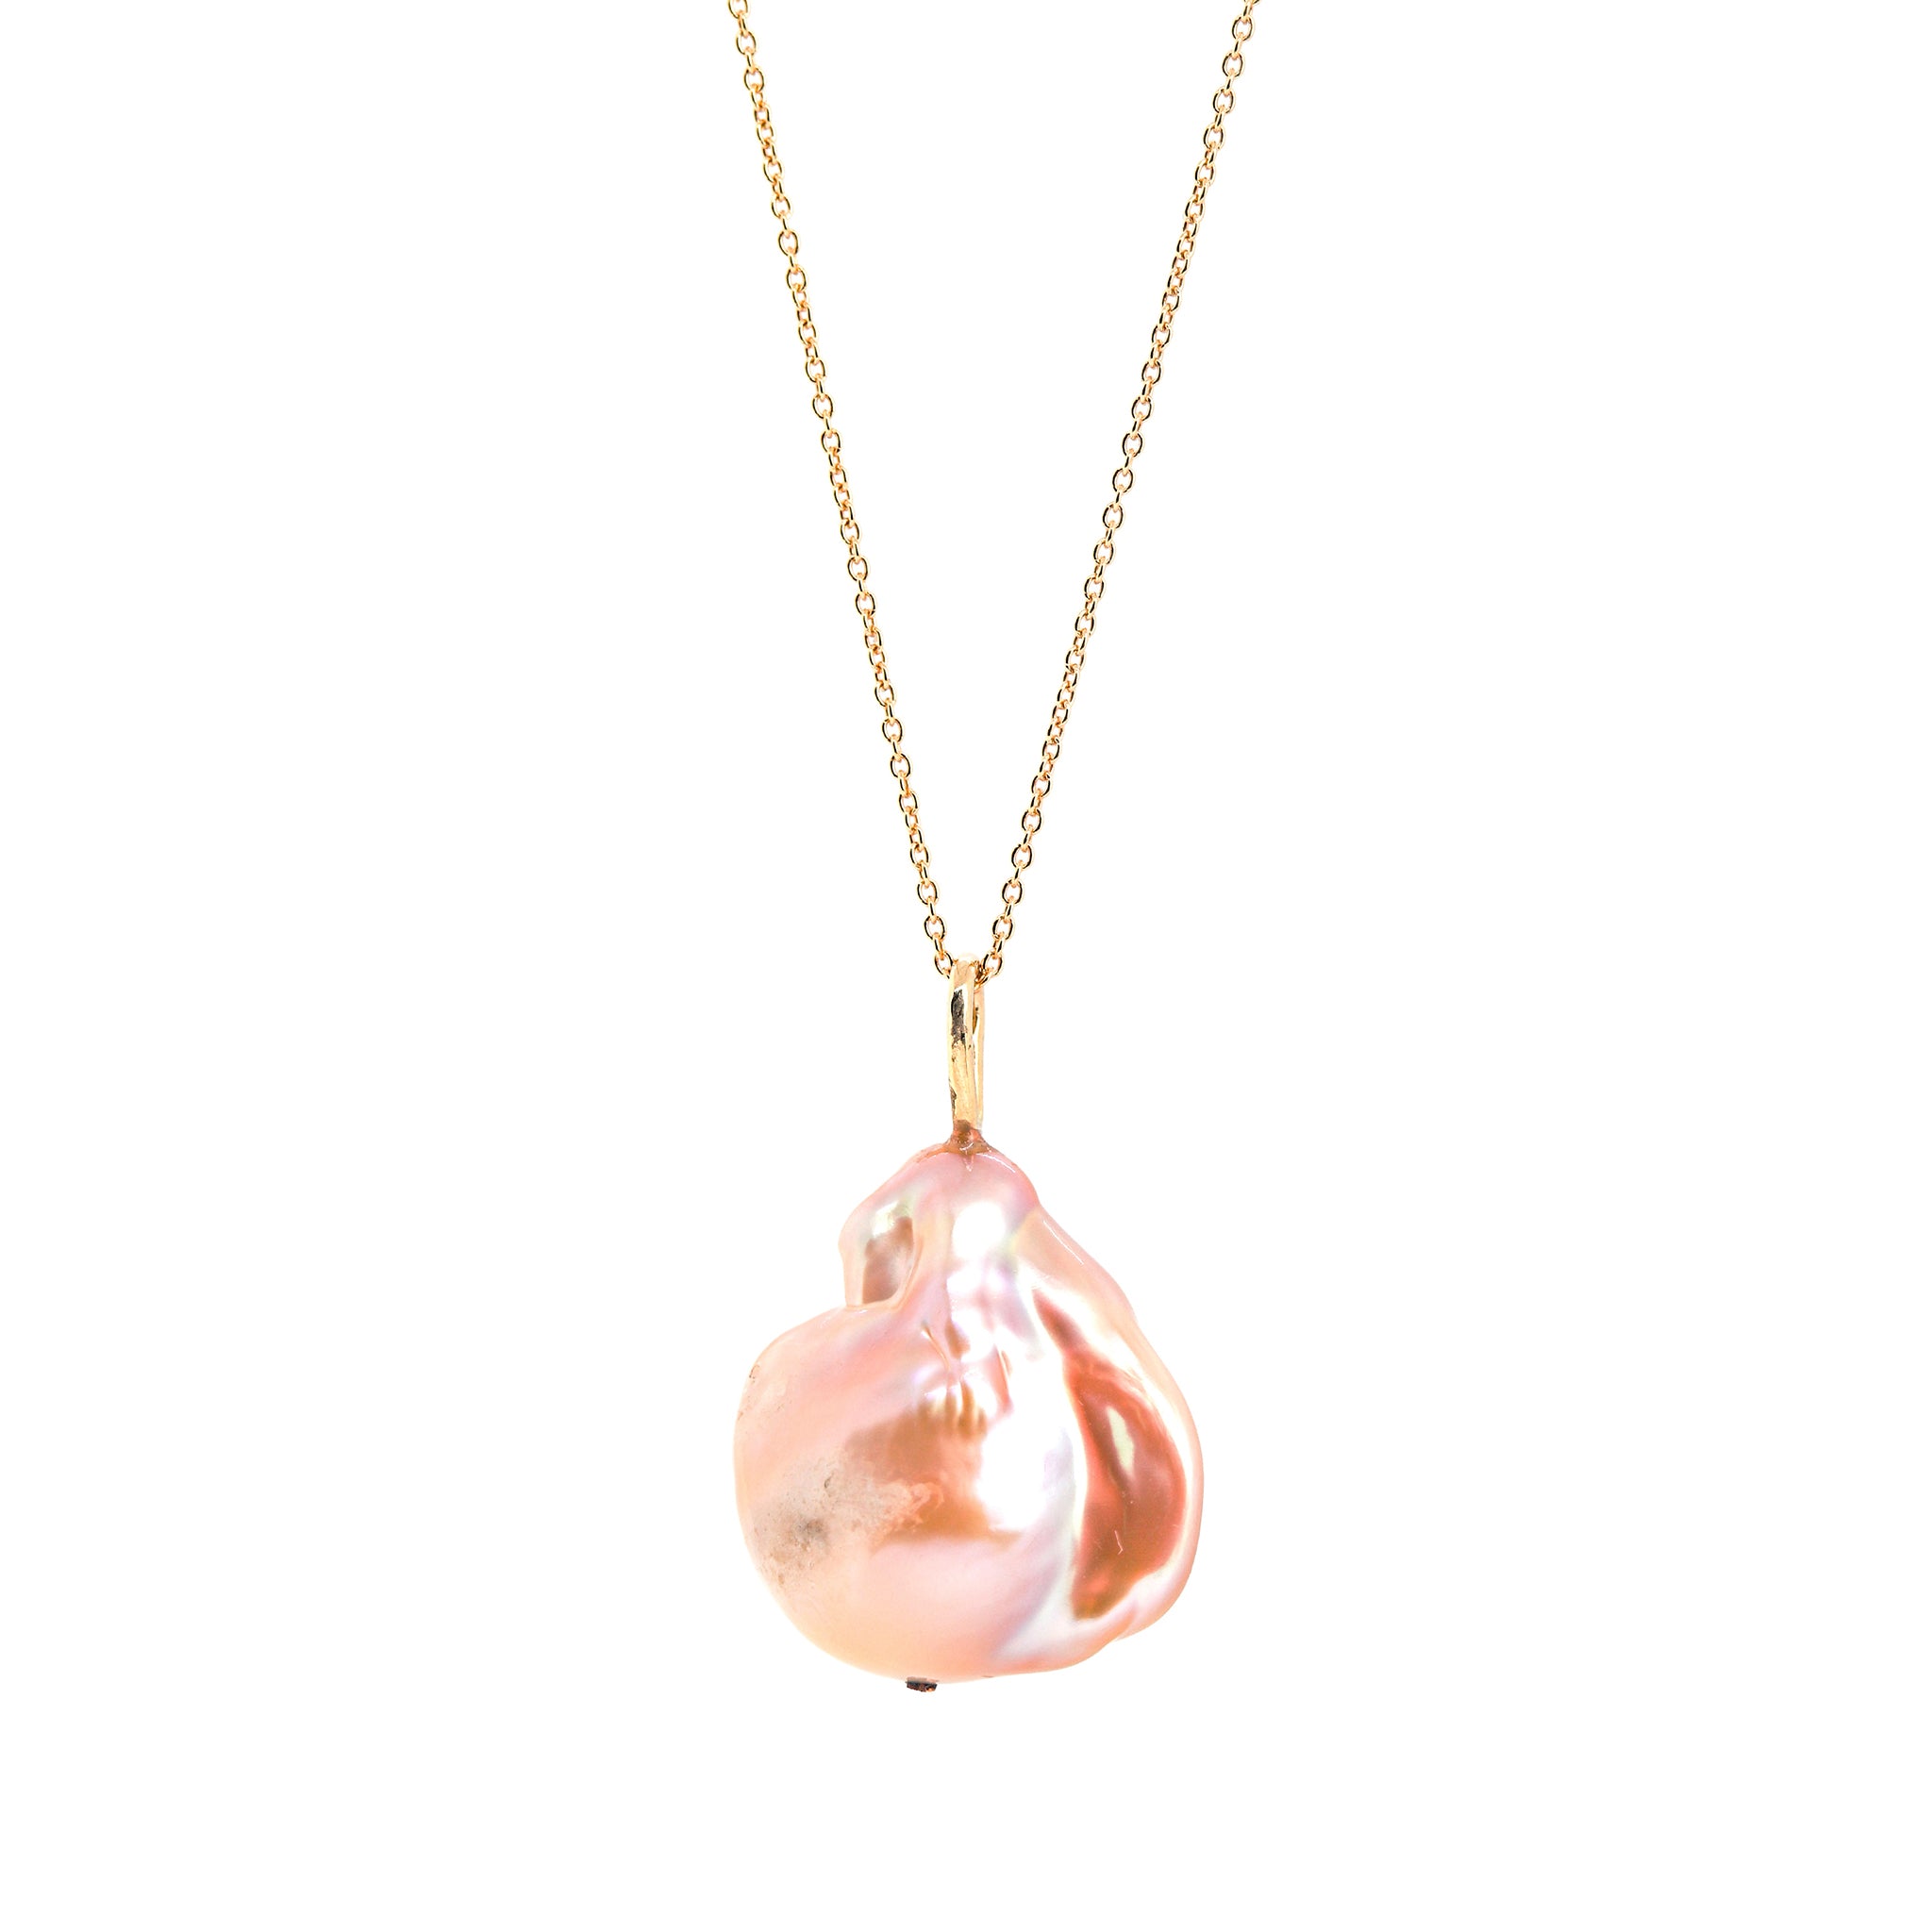 Pinkish Peach Baroque Pearl Necklace